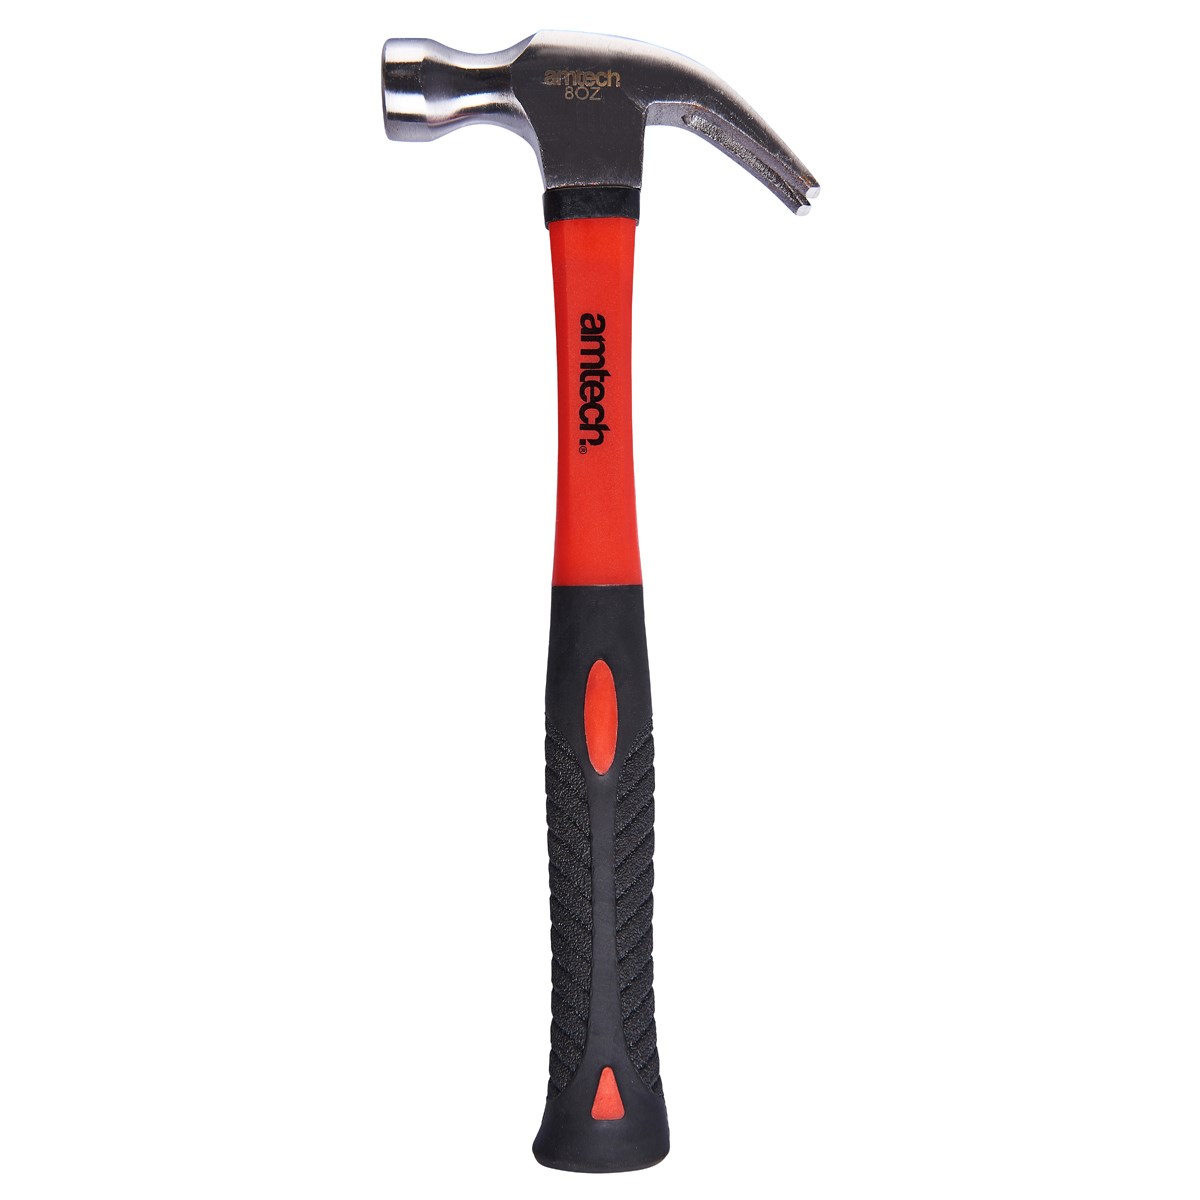 8oz Claw Hammer with Hardwood Shaft67661 Draper 225g 